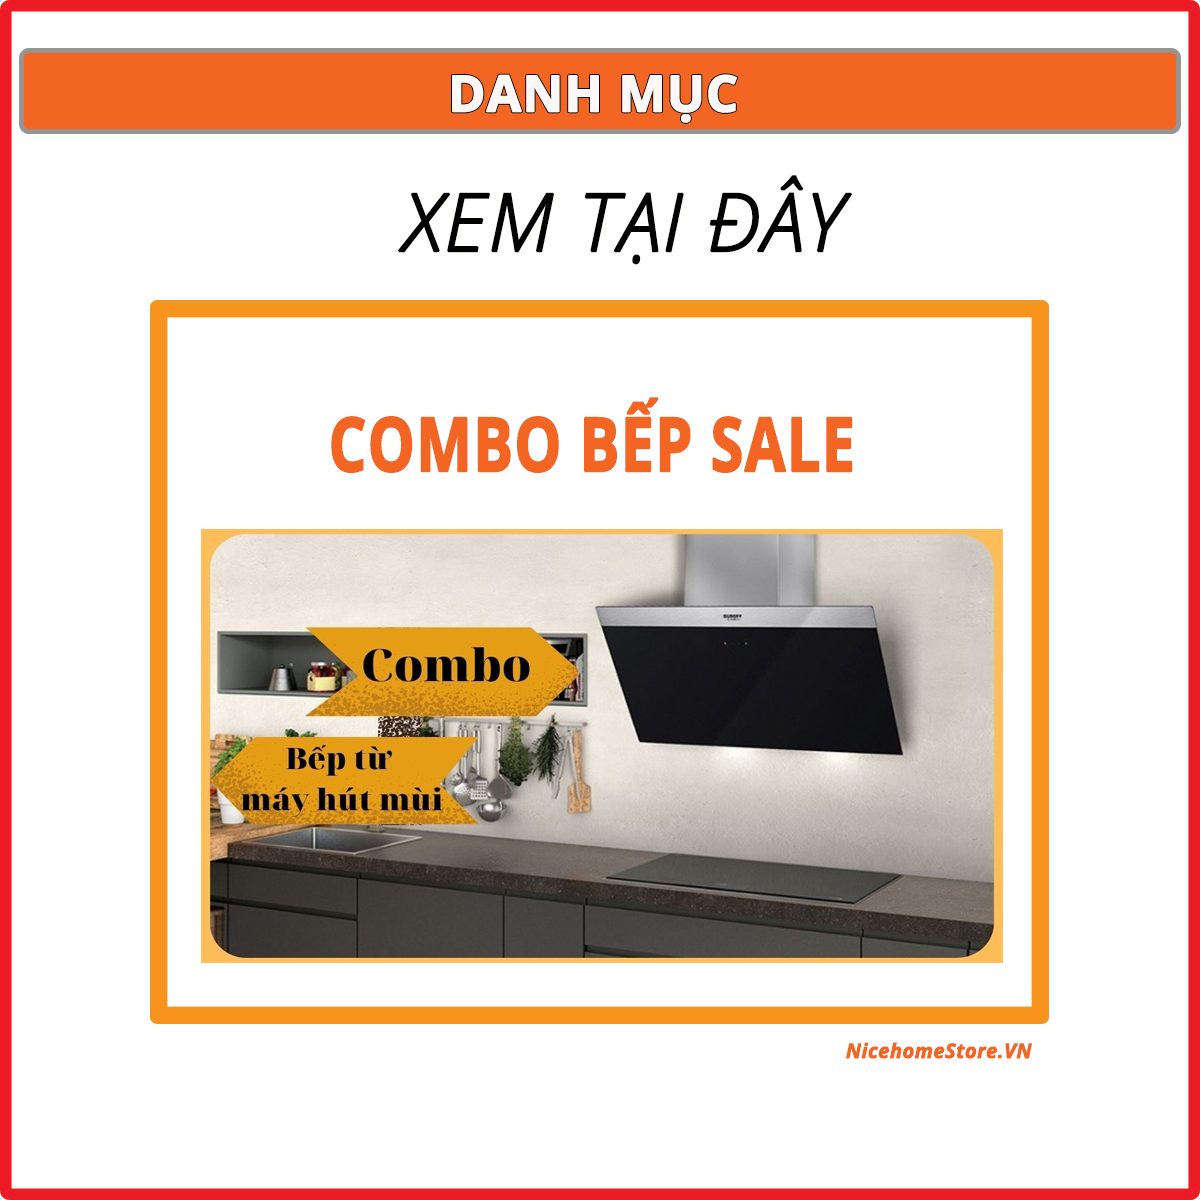 COMBO BẾP Sale 40% - 50%